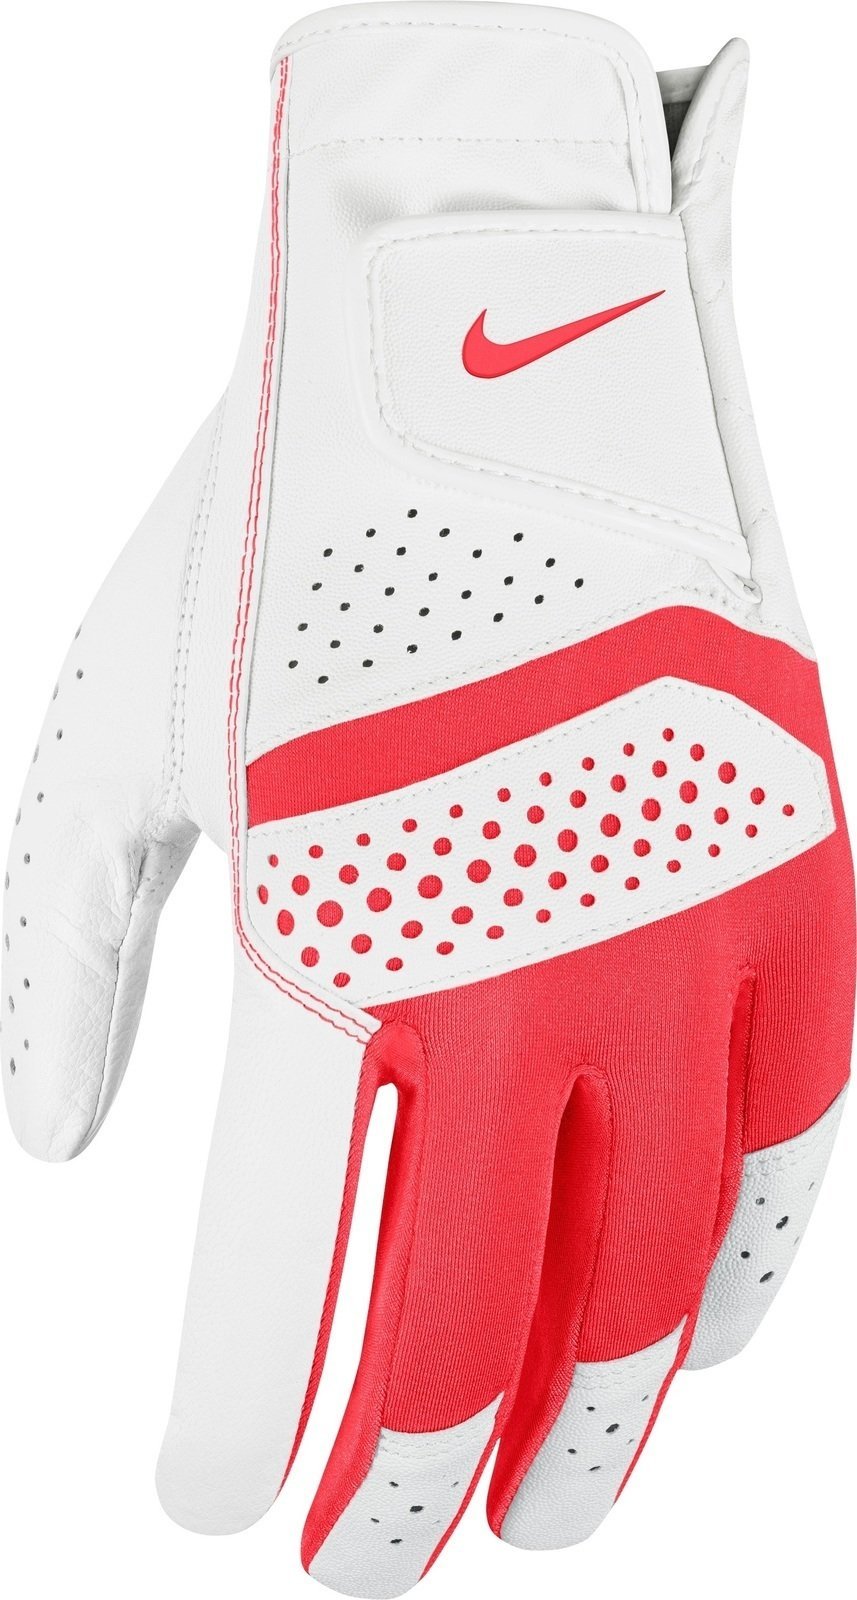 Handschuhe Nike Tech Extreme Vi Reg Lh 106 L